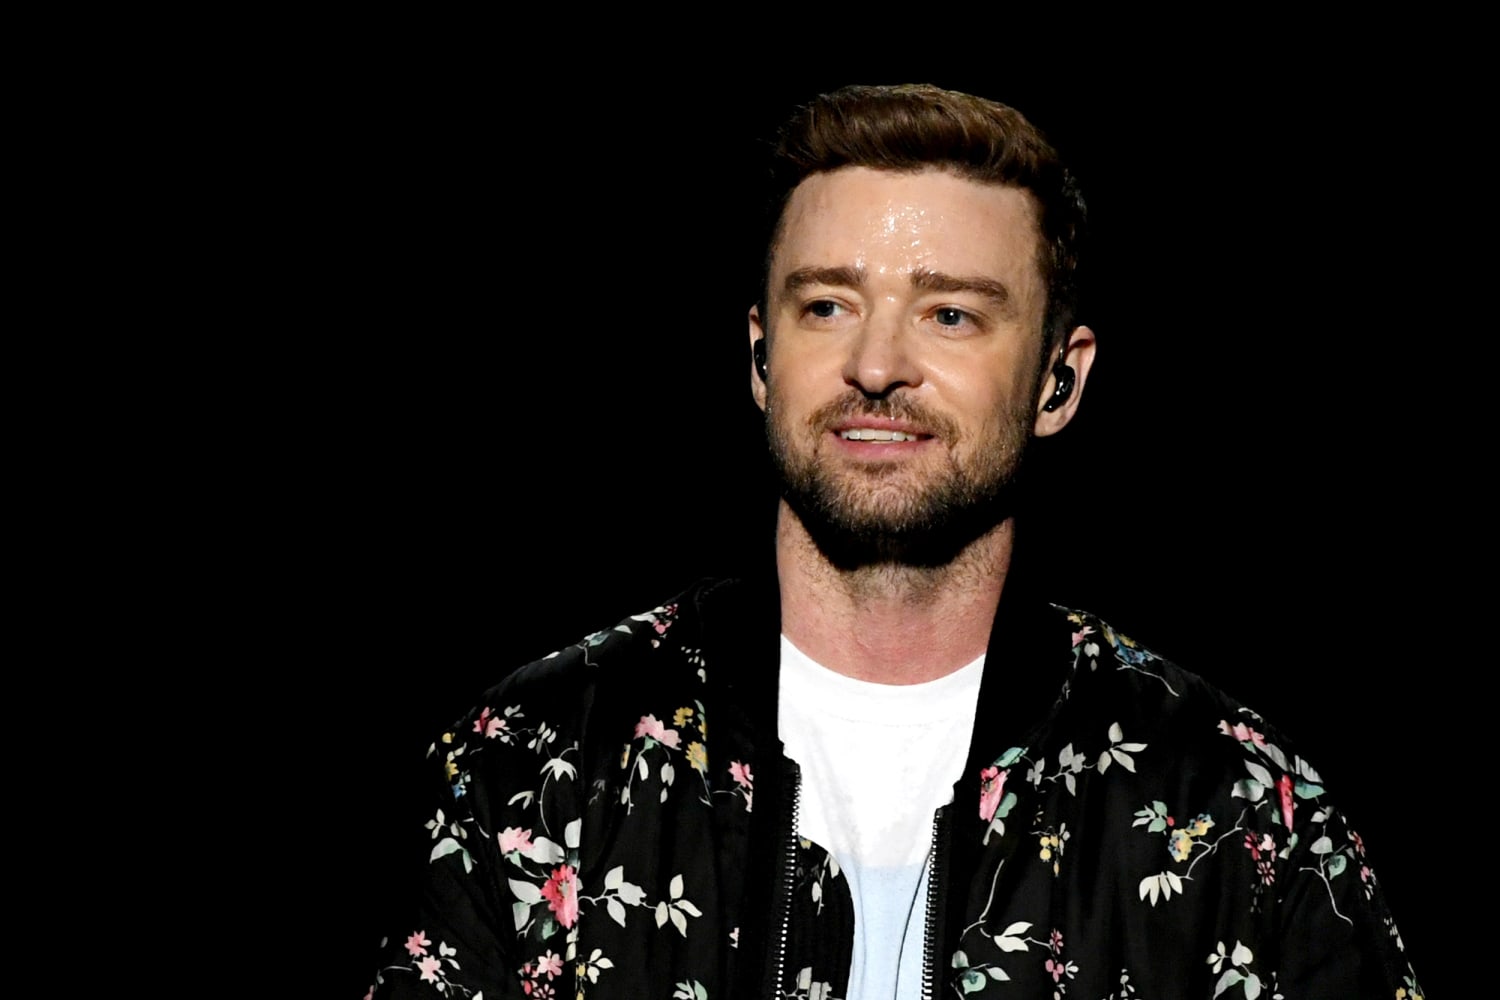 Justin Timberlake makes weak apology to Britney Spears, Janet Jackson